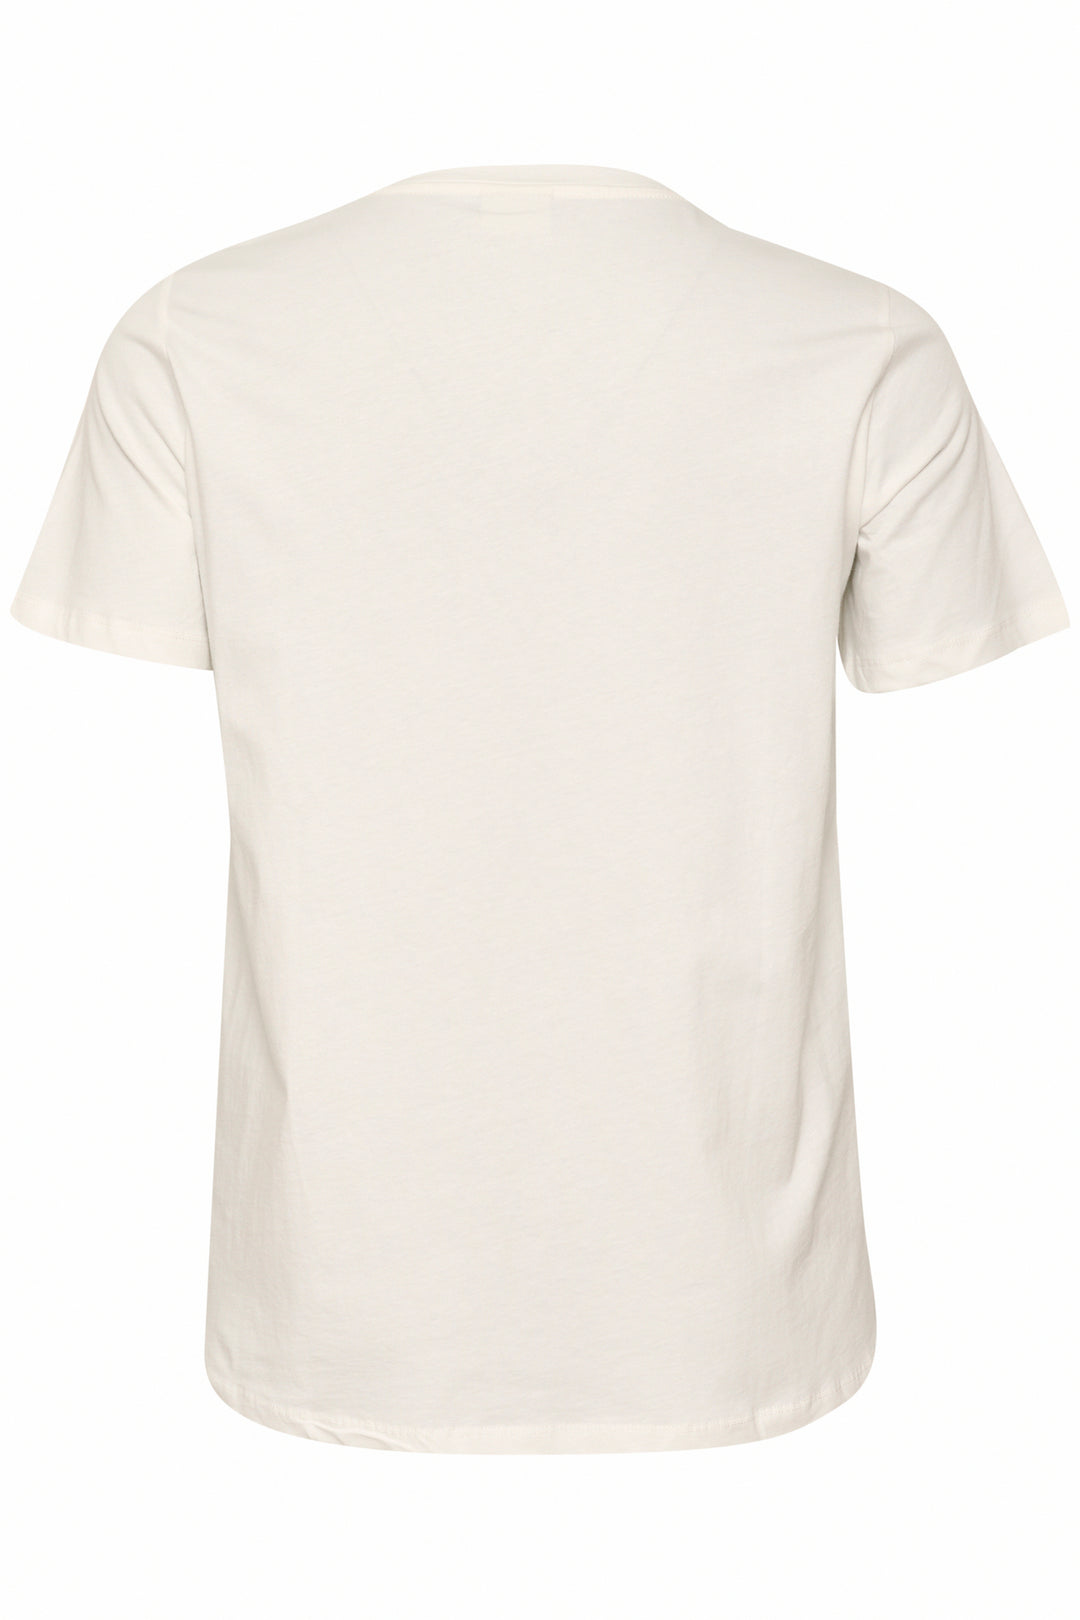 t-shirt met decoratieve tekening - kaffe curve - - grote maten - dameskleding - kledingwinkel - herent - leuven